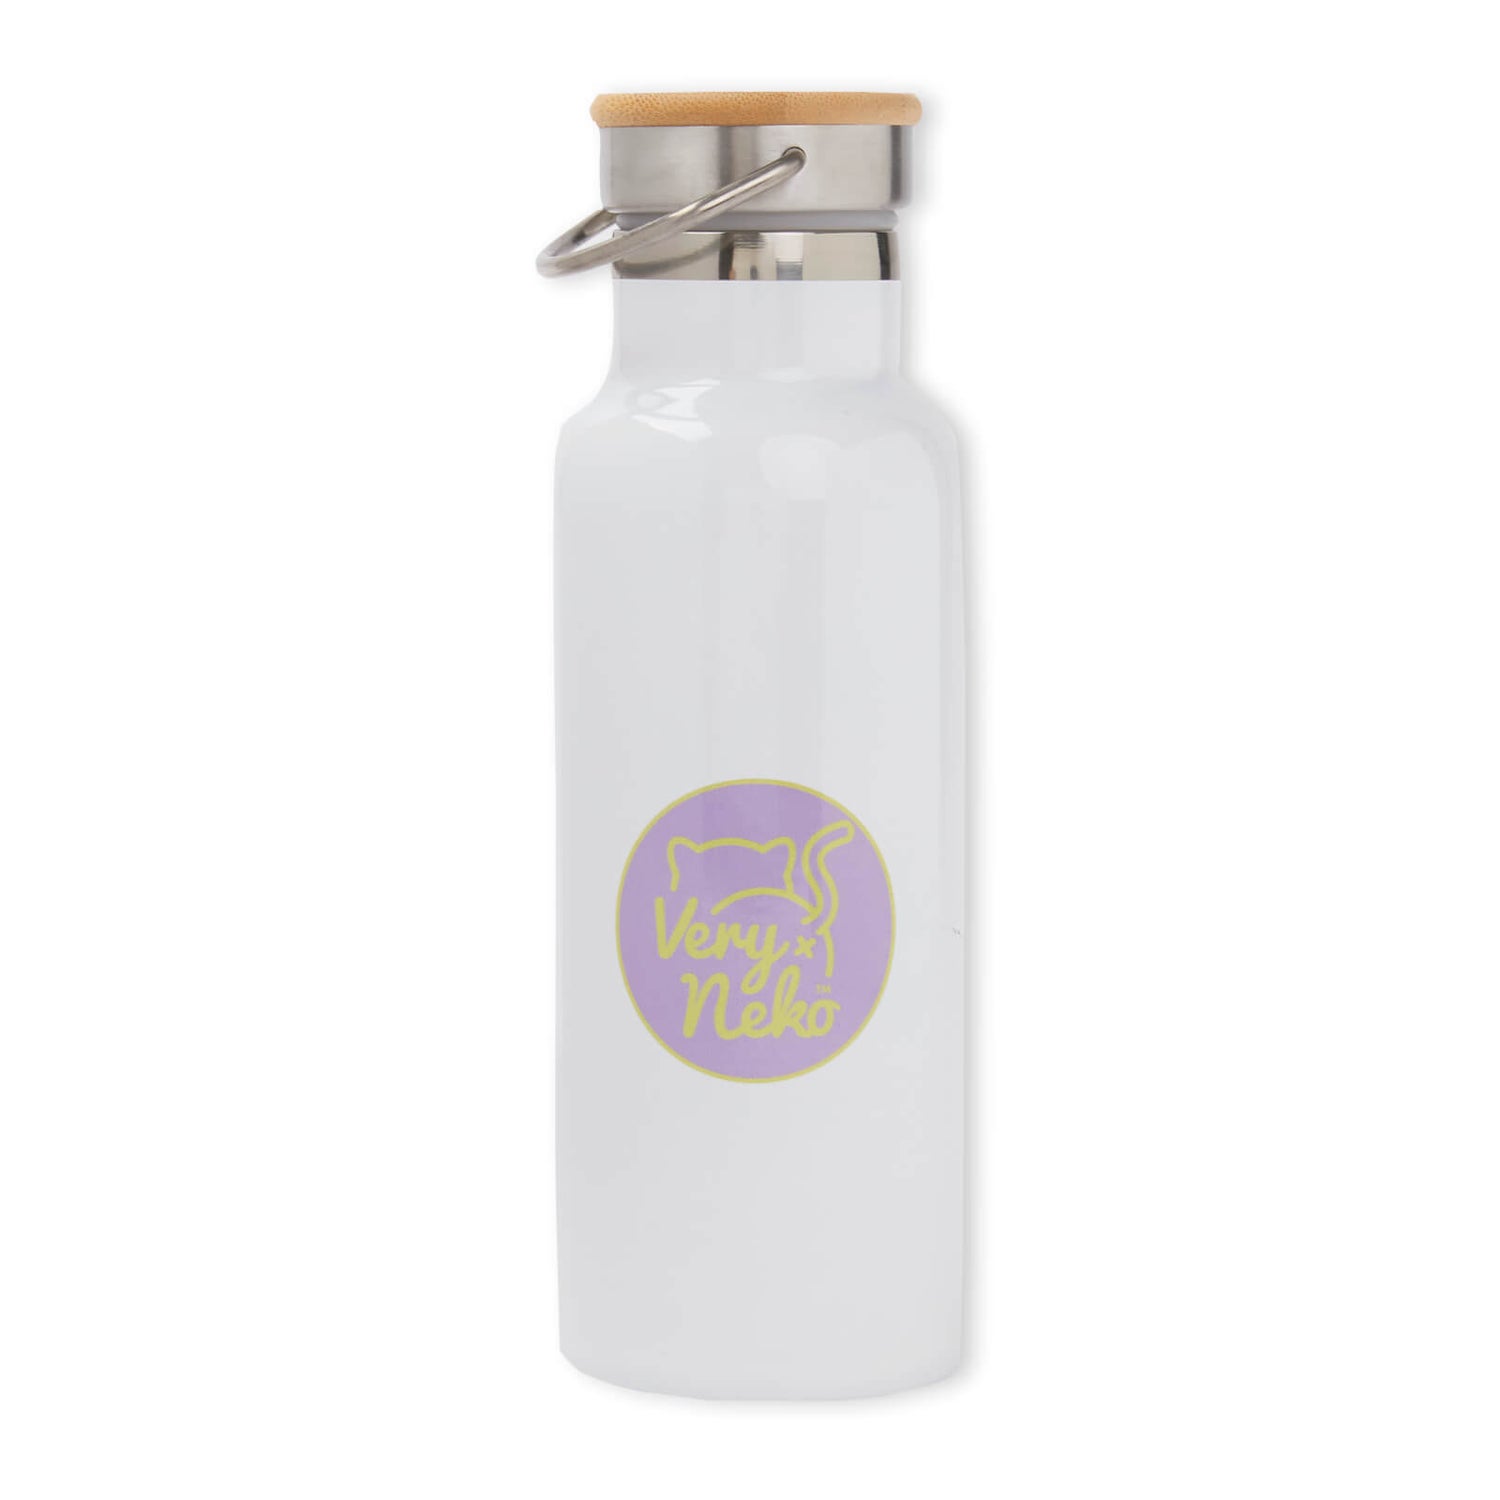 Very Neko Logo Portable Insulated Water Bottle - White